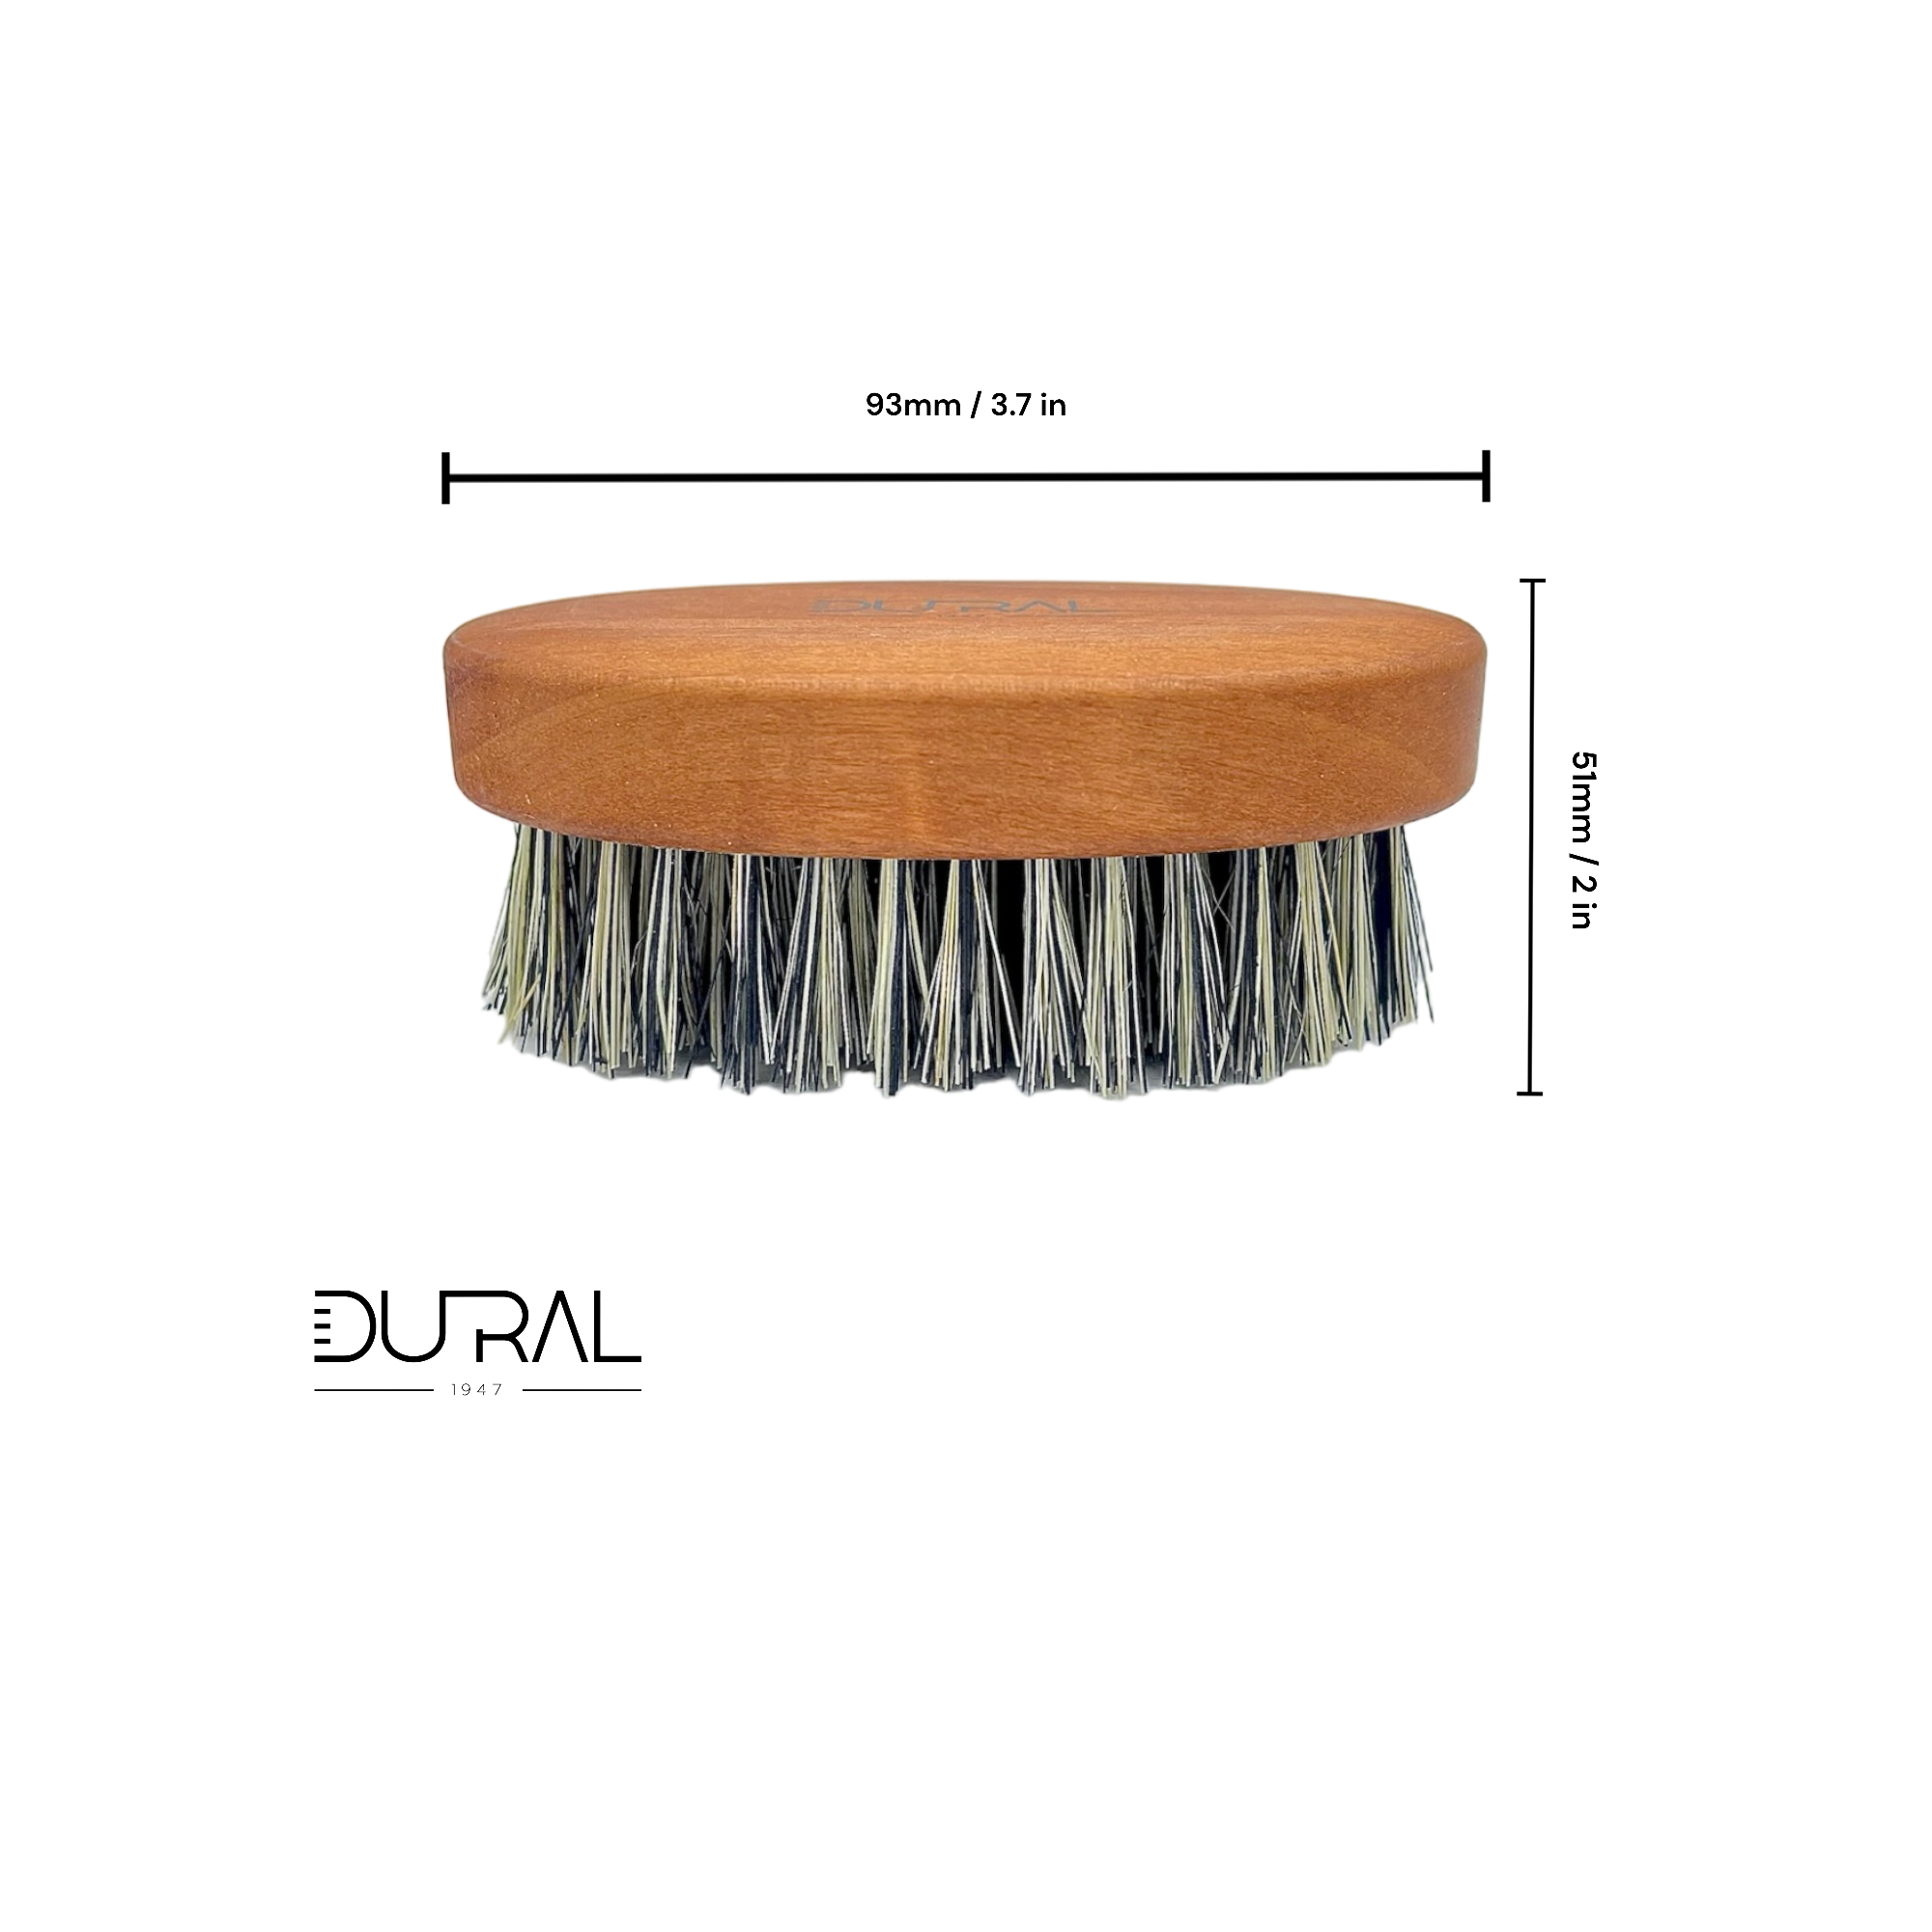 Dural Pear wood beard brush with pure Tampico fiber - 7 rows